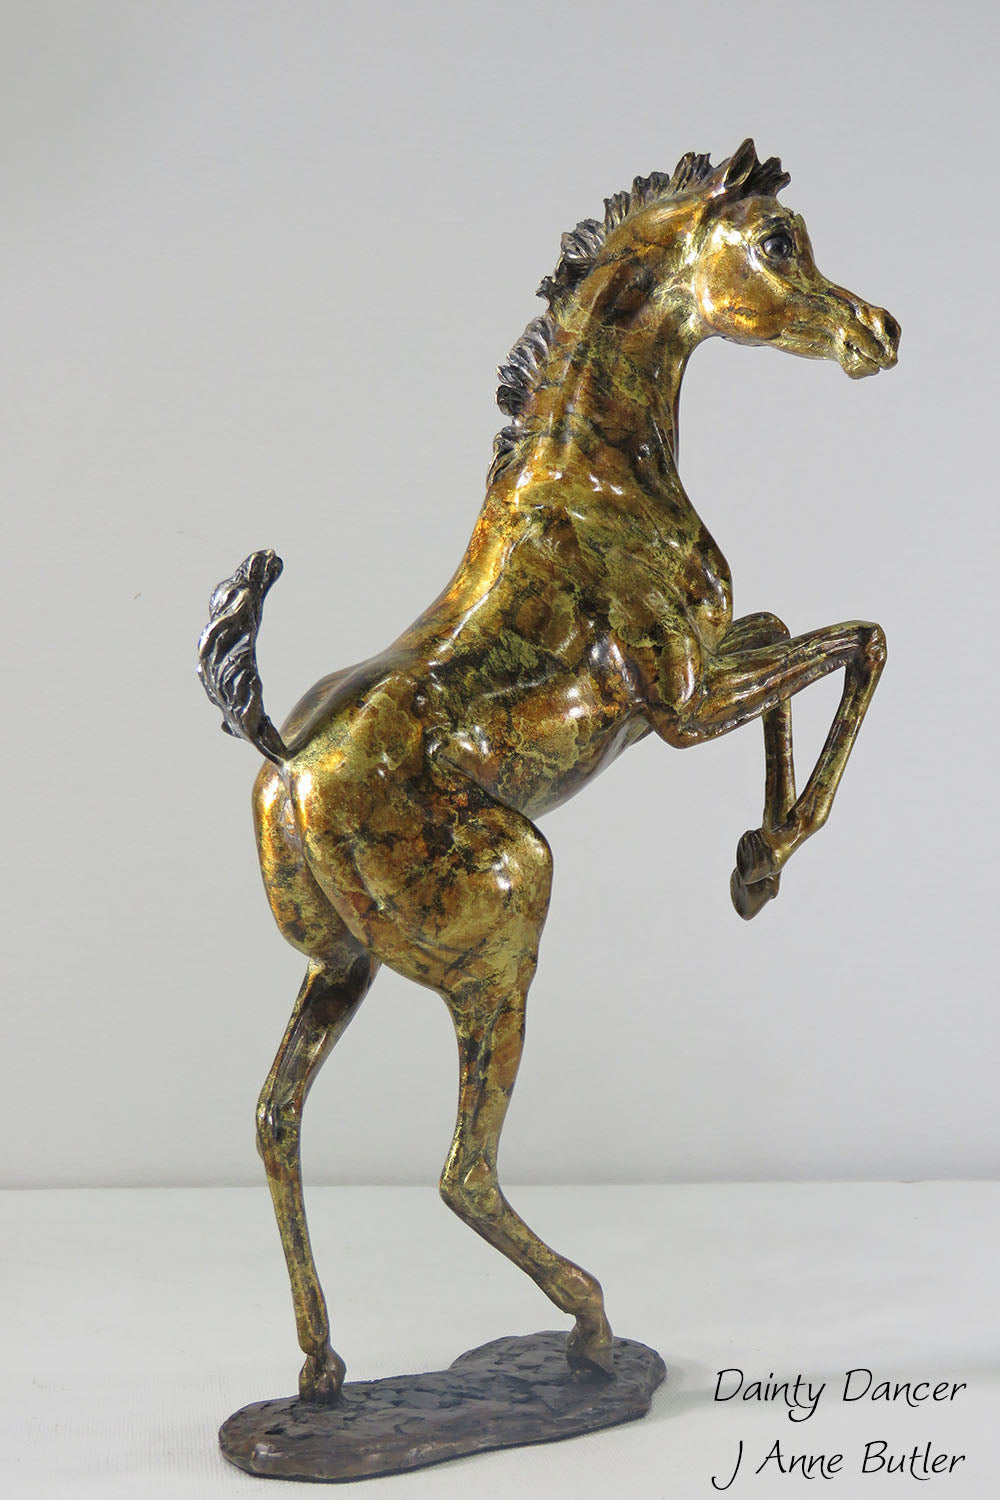 Foal statue in bronze